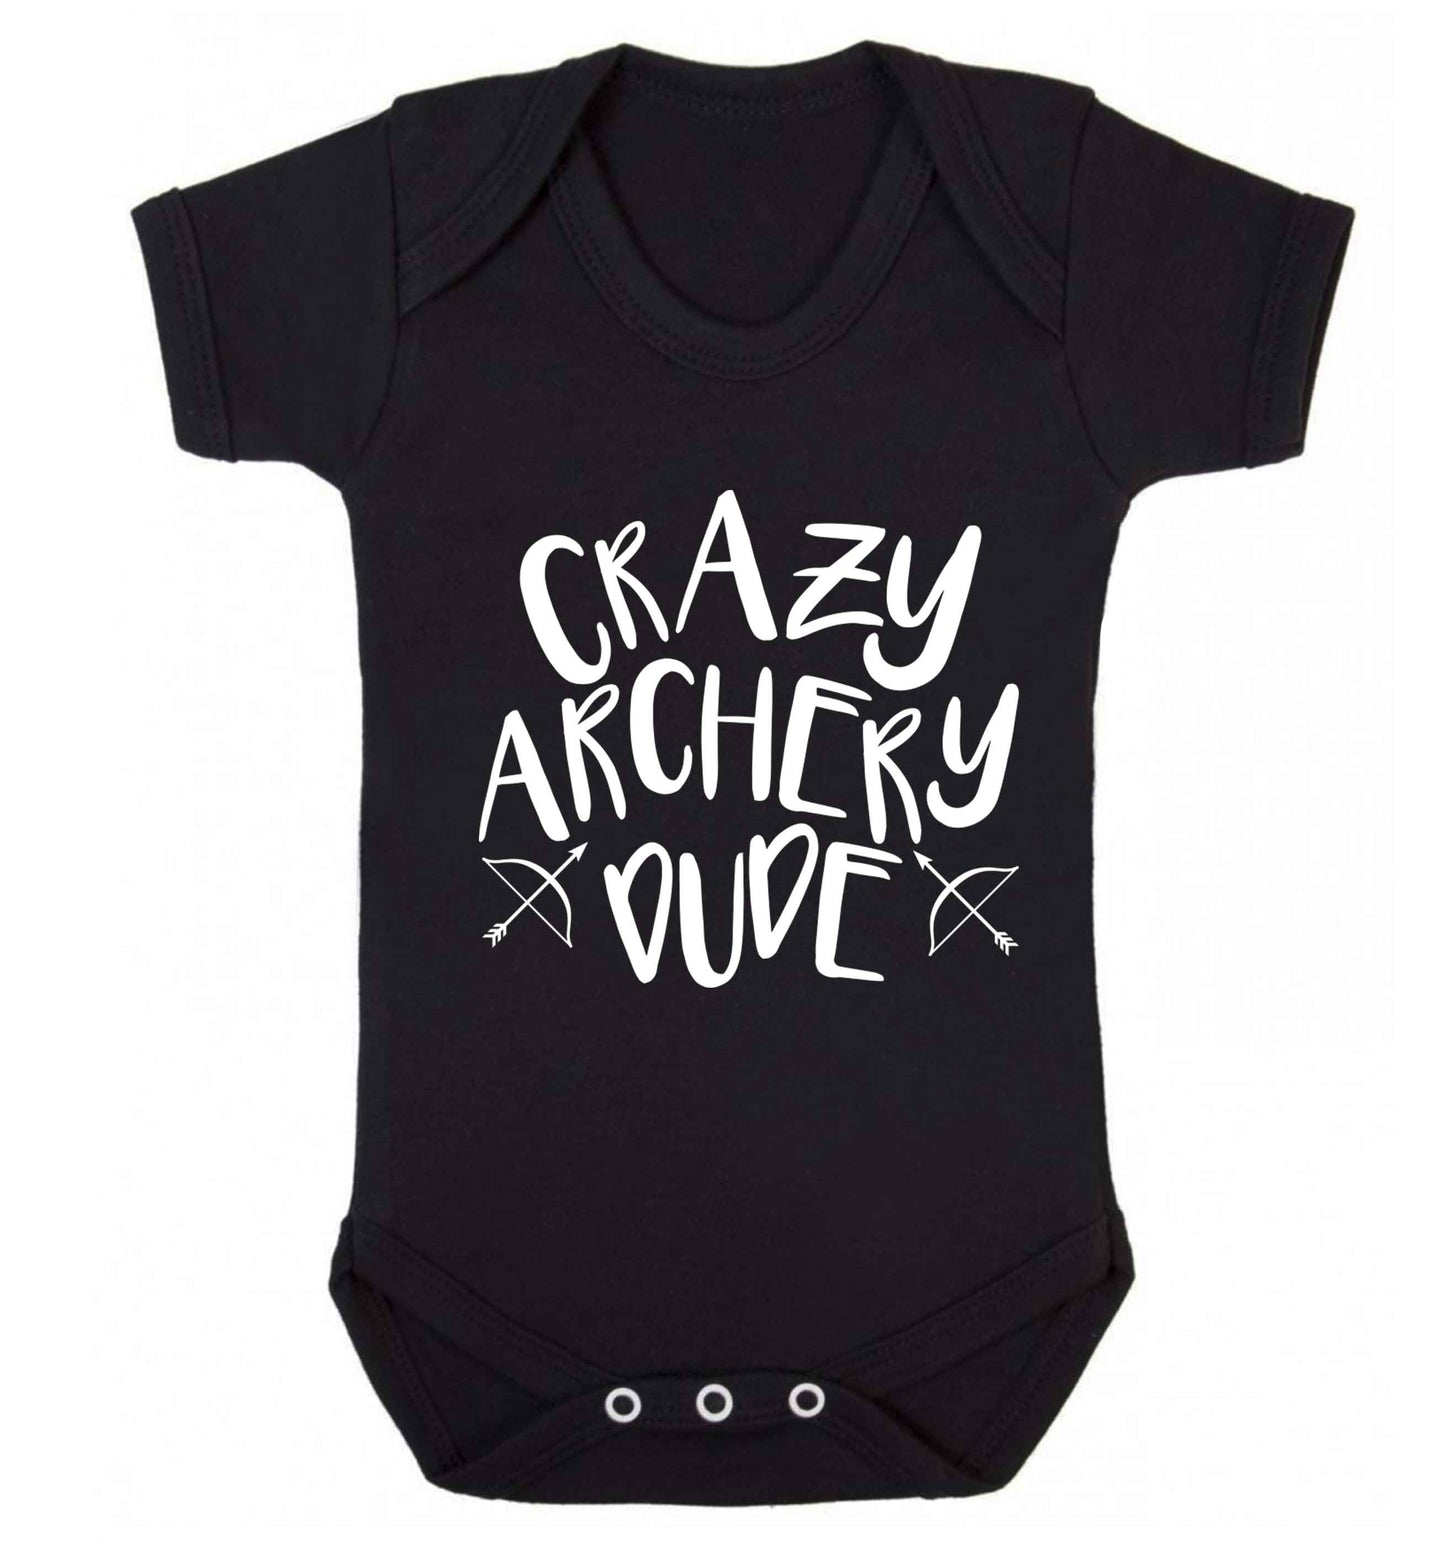 Crazy archery dude Baby Vest black 18-24 months